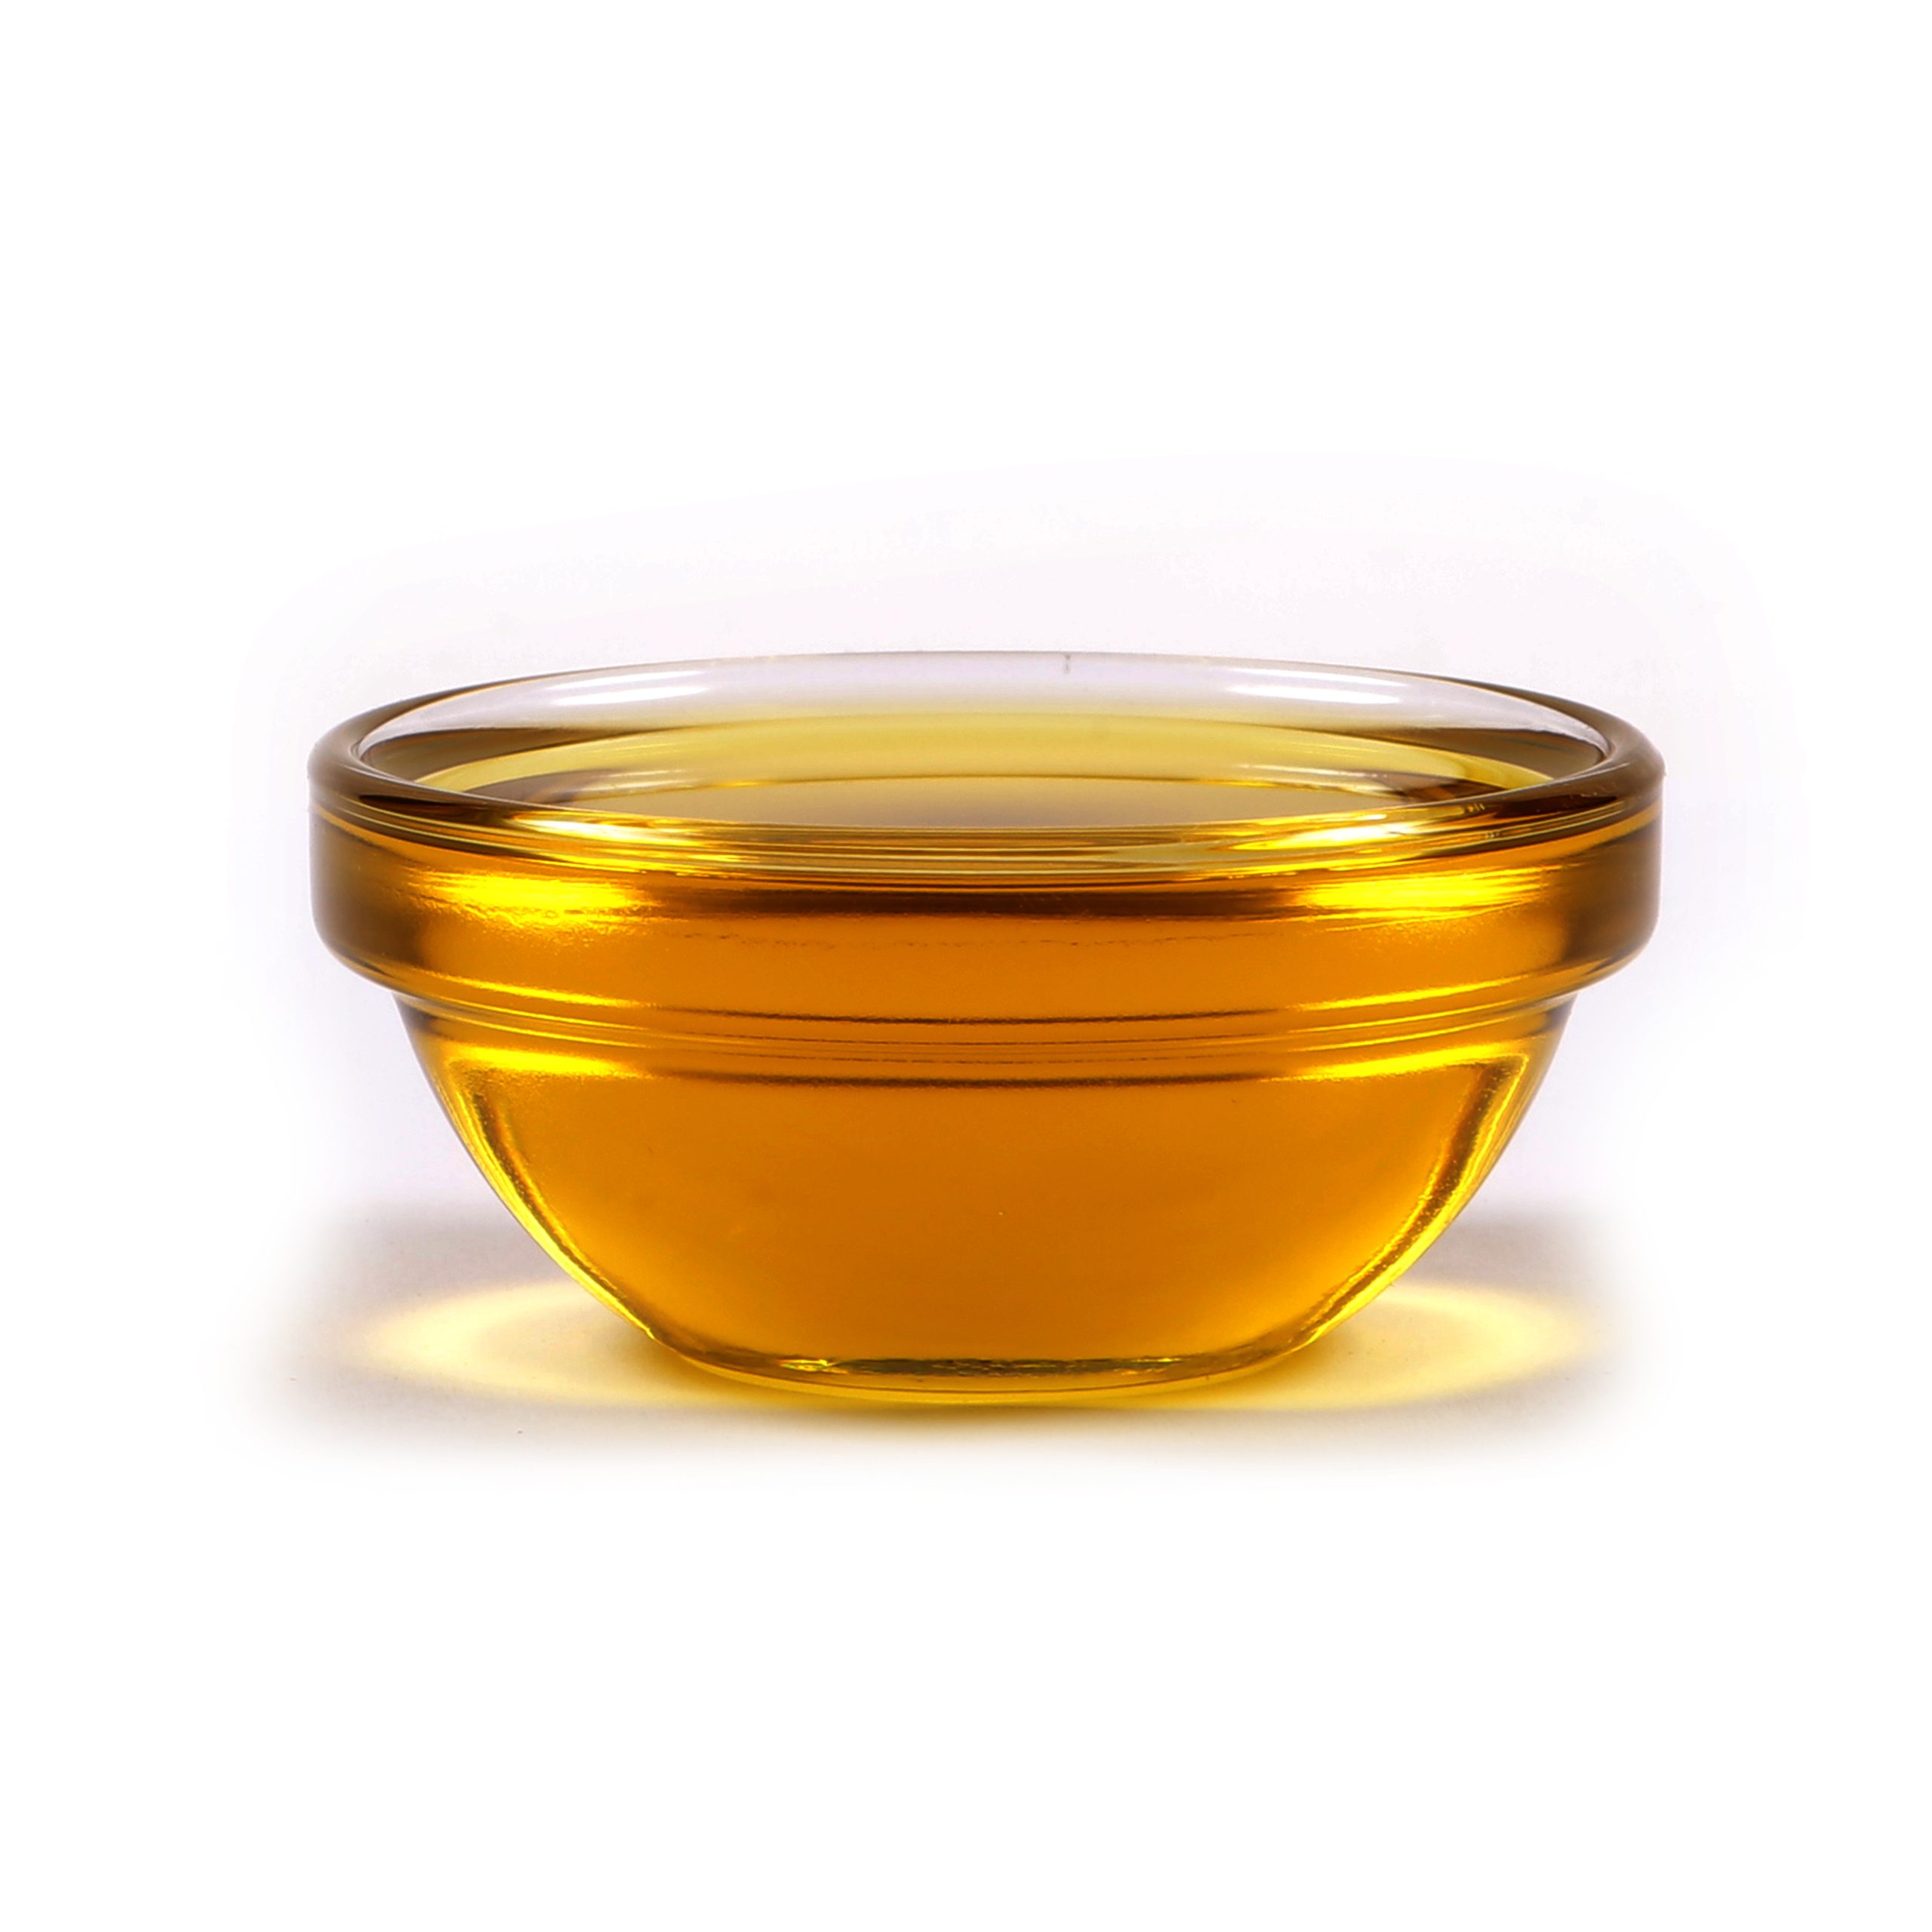 Dorri - Italian Extra Virgin Olive Oil